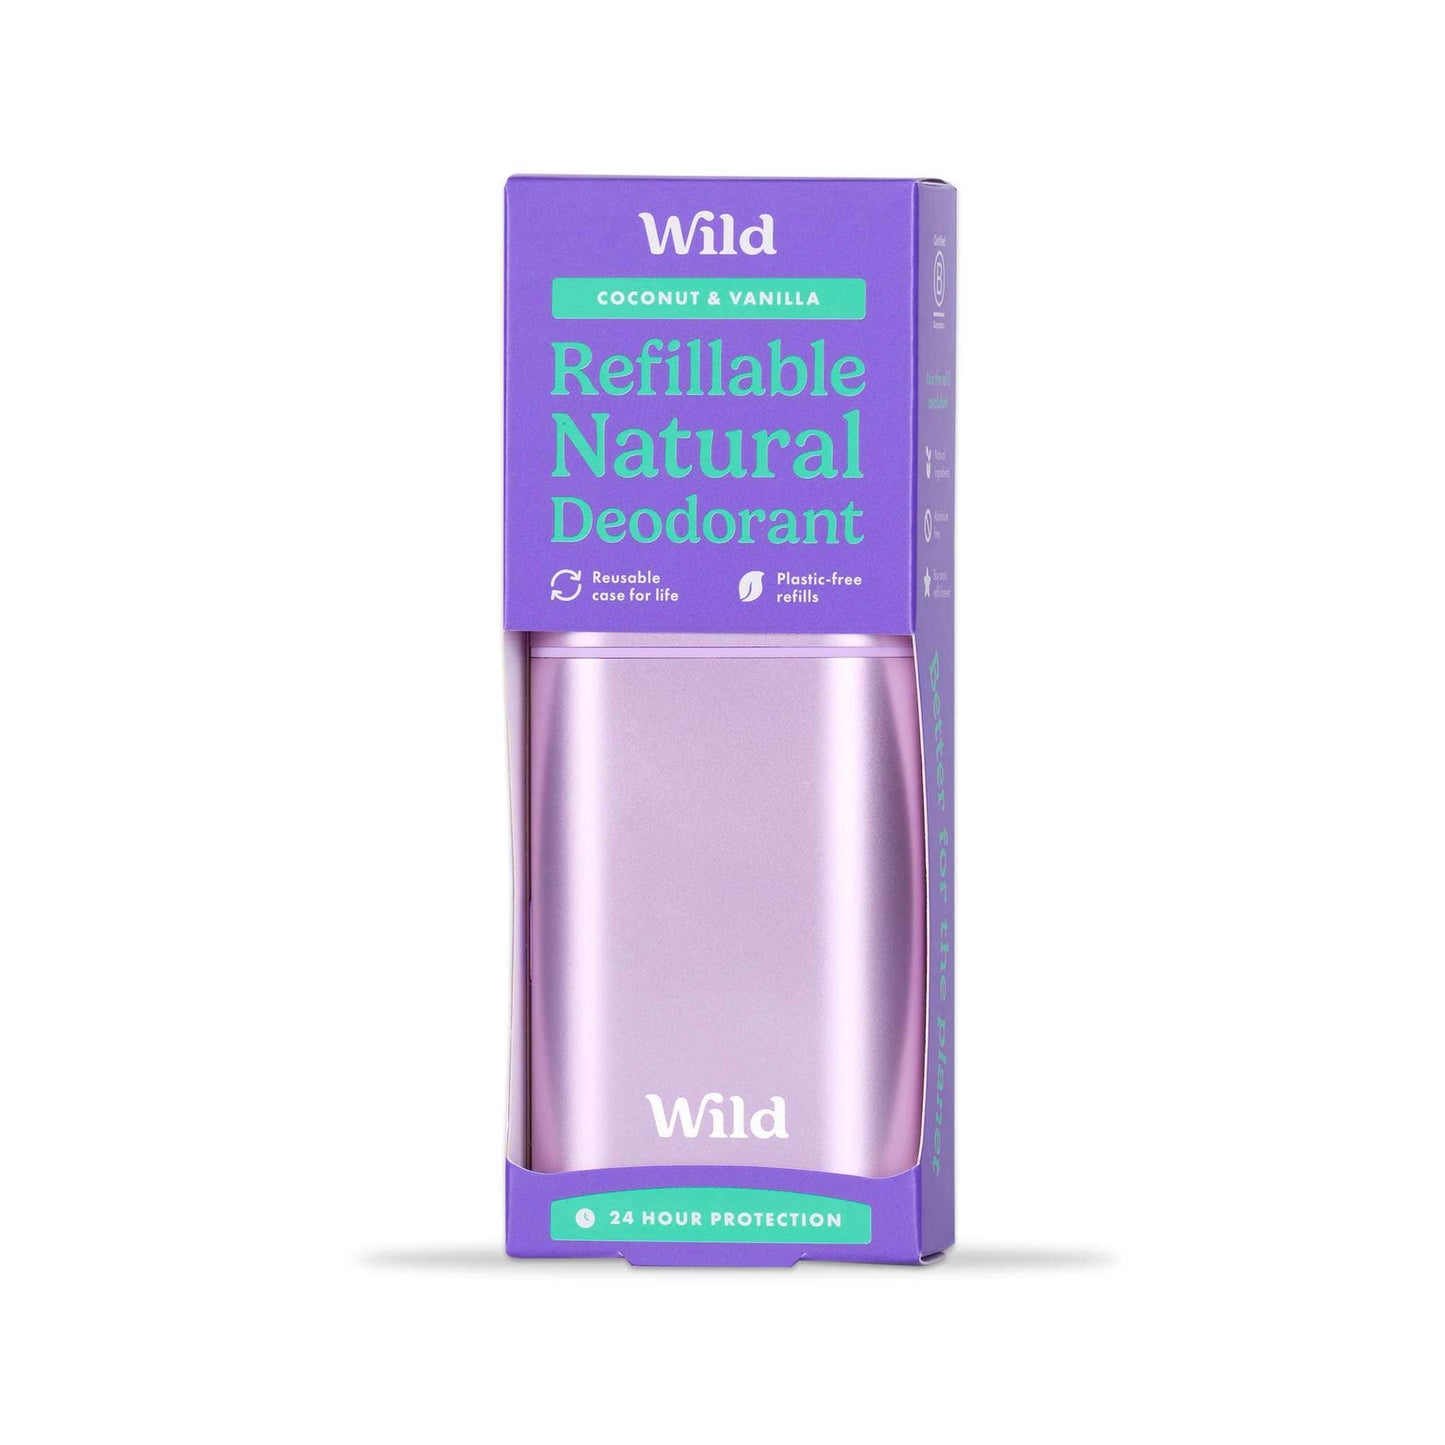 Wild Deodorant Wild Purple Case and Coconut Dreams Natural Deodorant Starter Pack